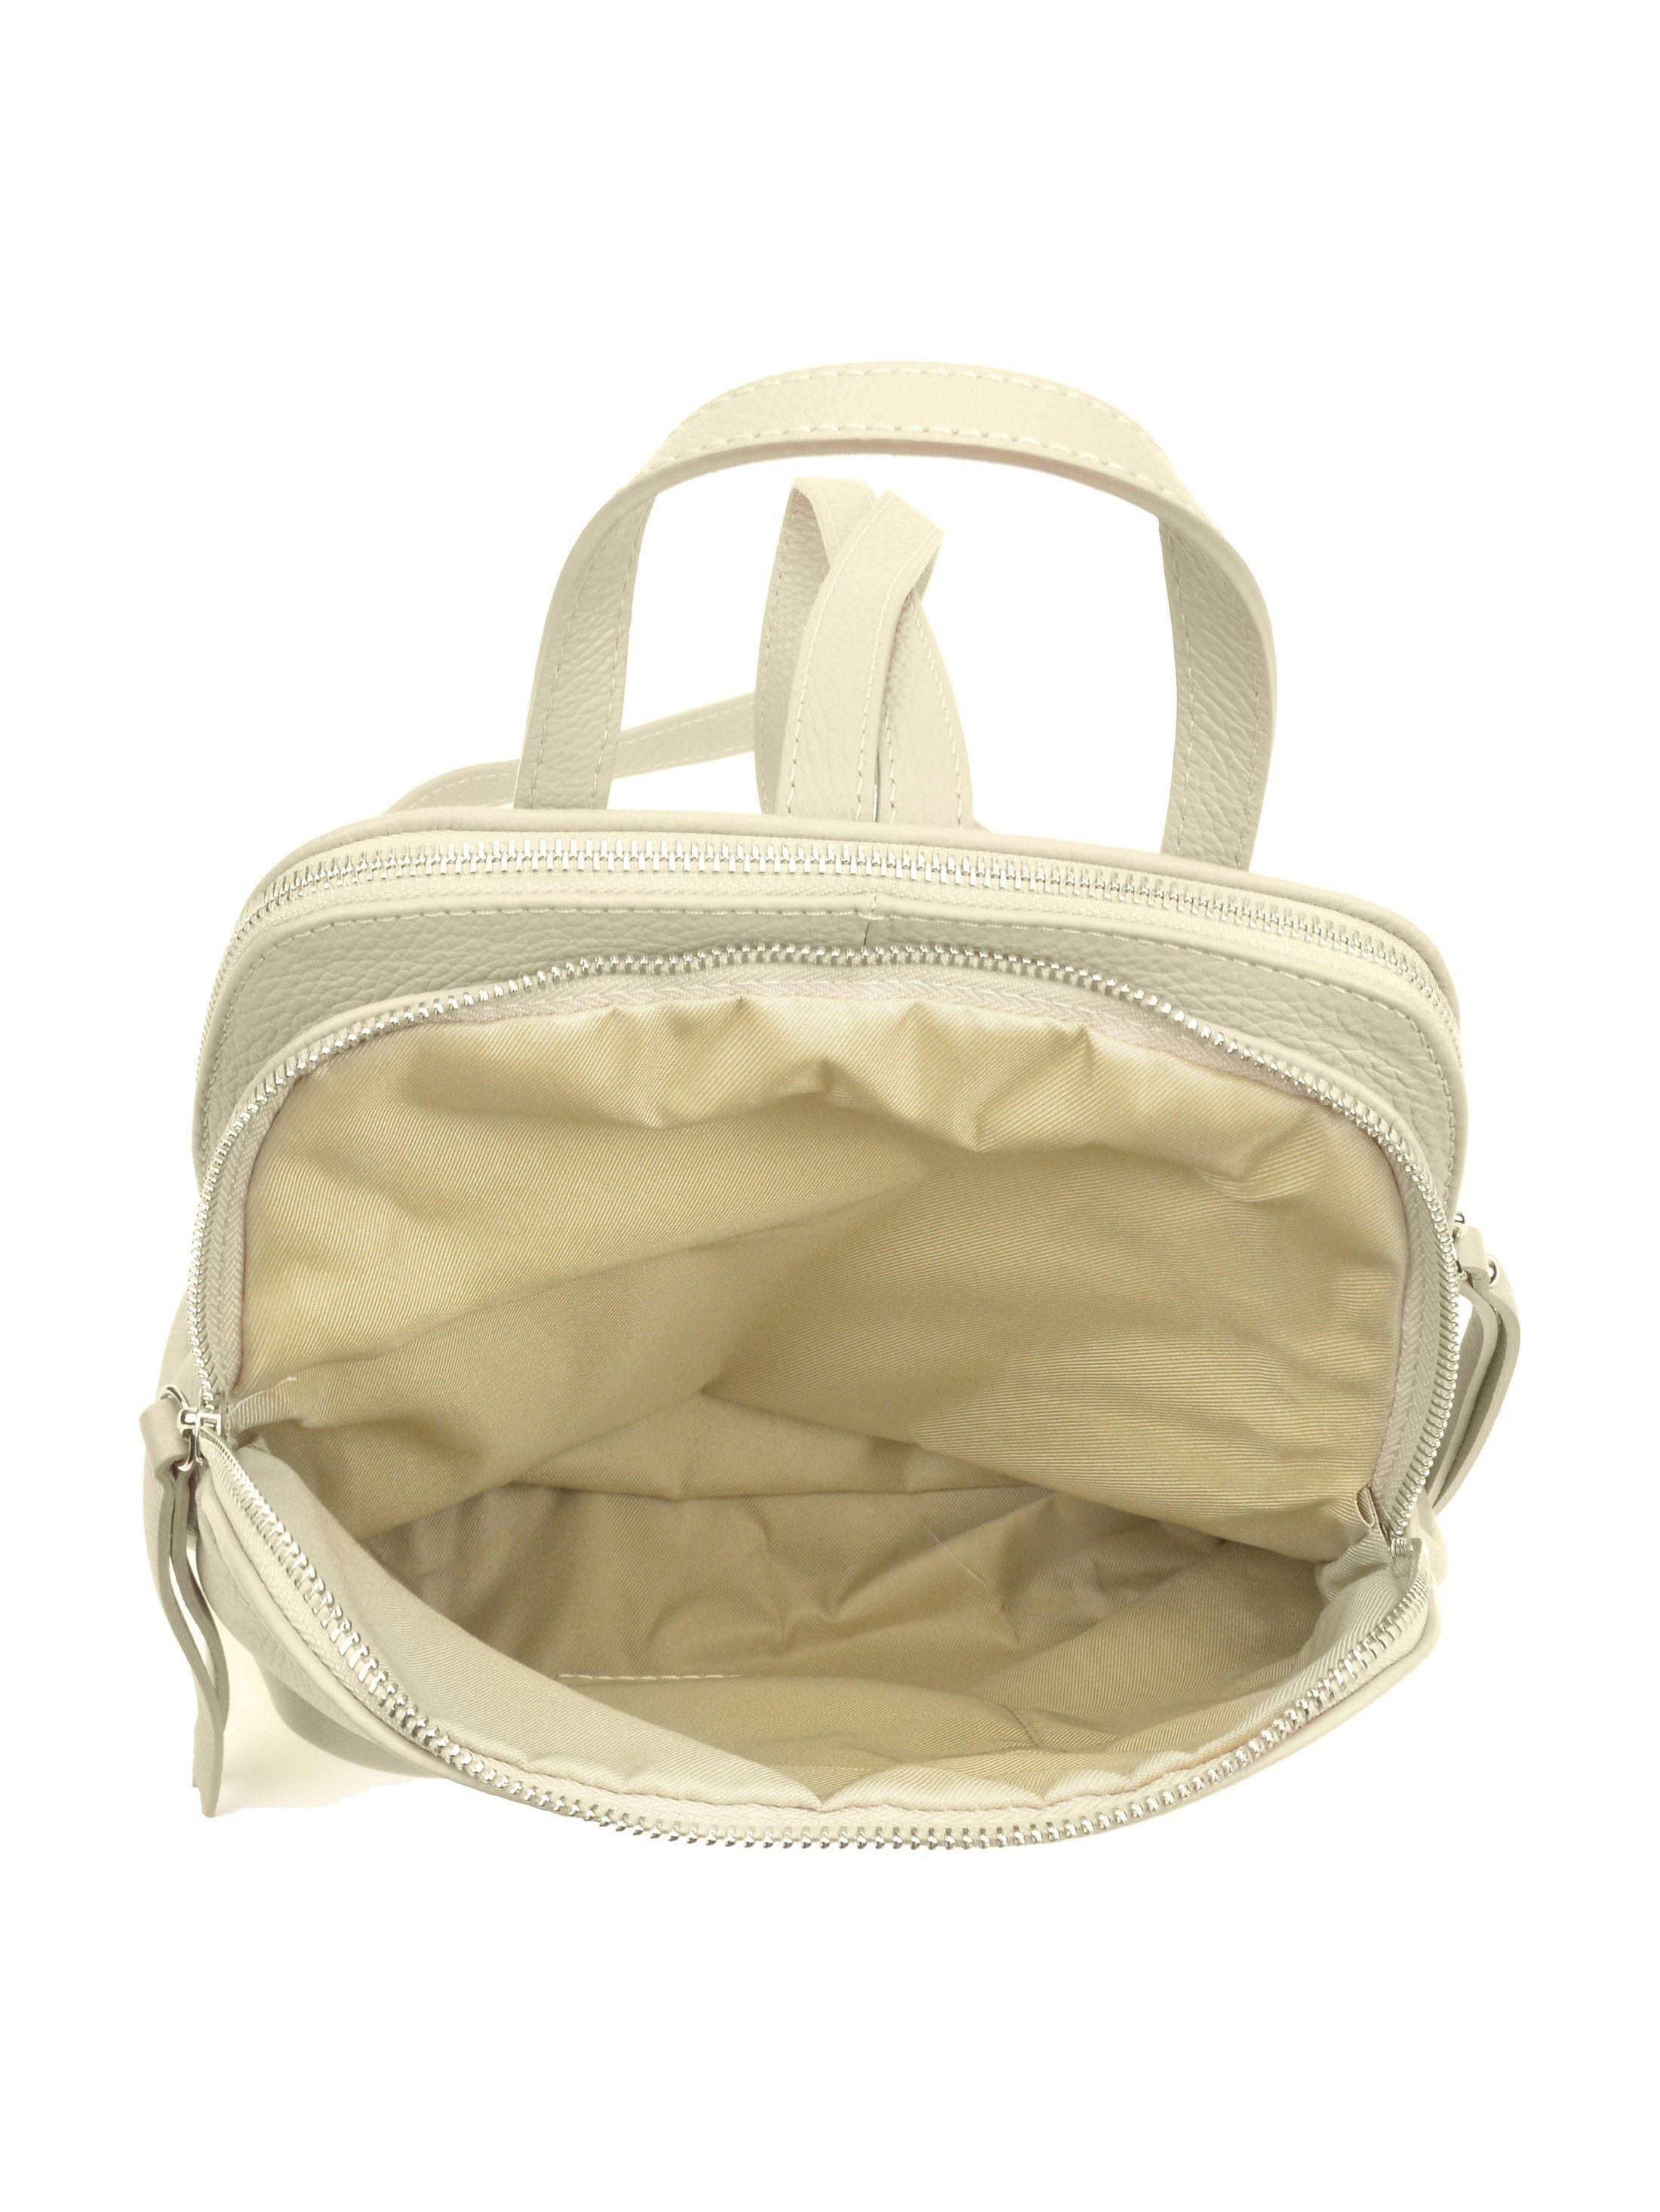 Backpack
100% cow leather
Double top zip compartments
Interior pocket
Back zip pocket
Dimensions (L): 30x30x14.5 cm
Handle: 25 cm
Shoulder strap: 2x90 cm